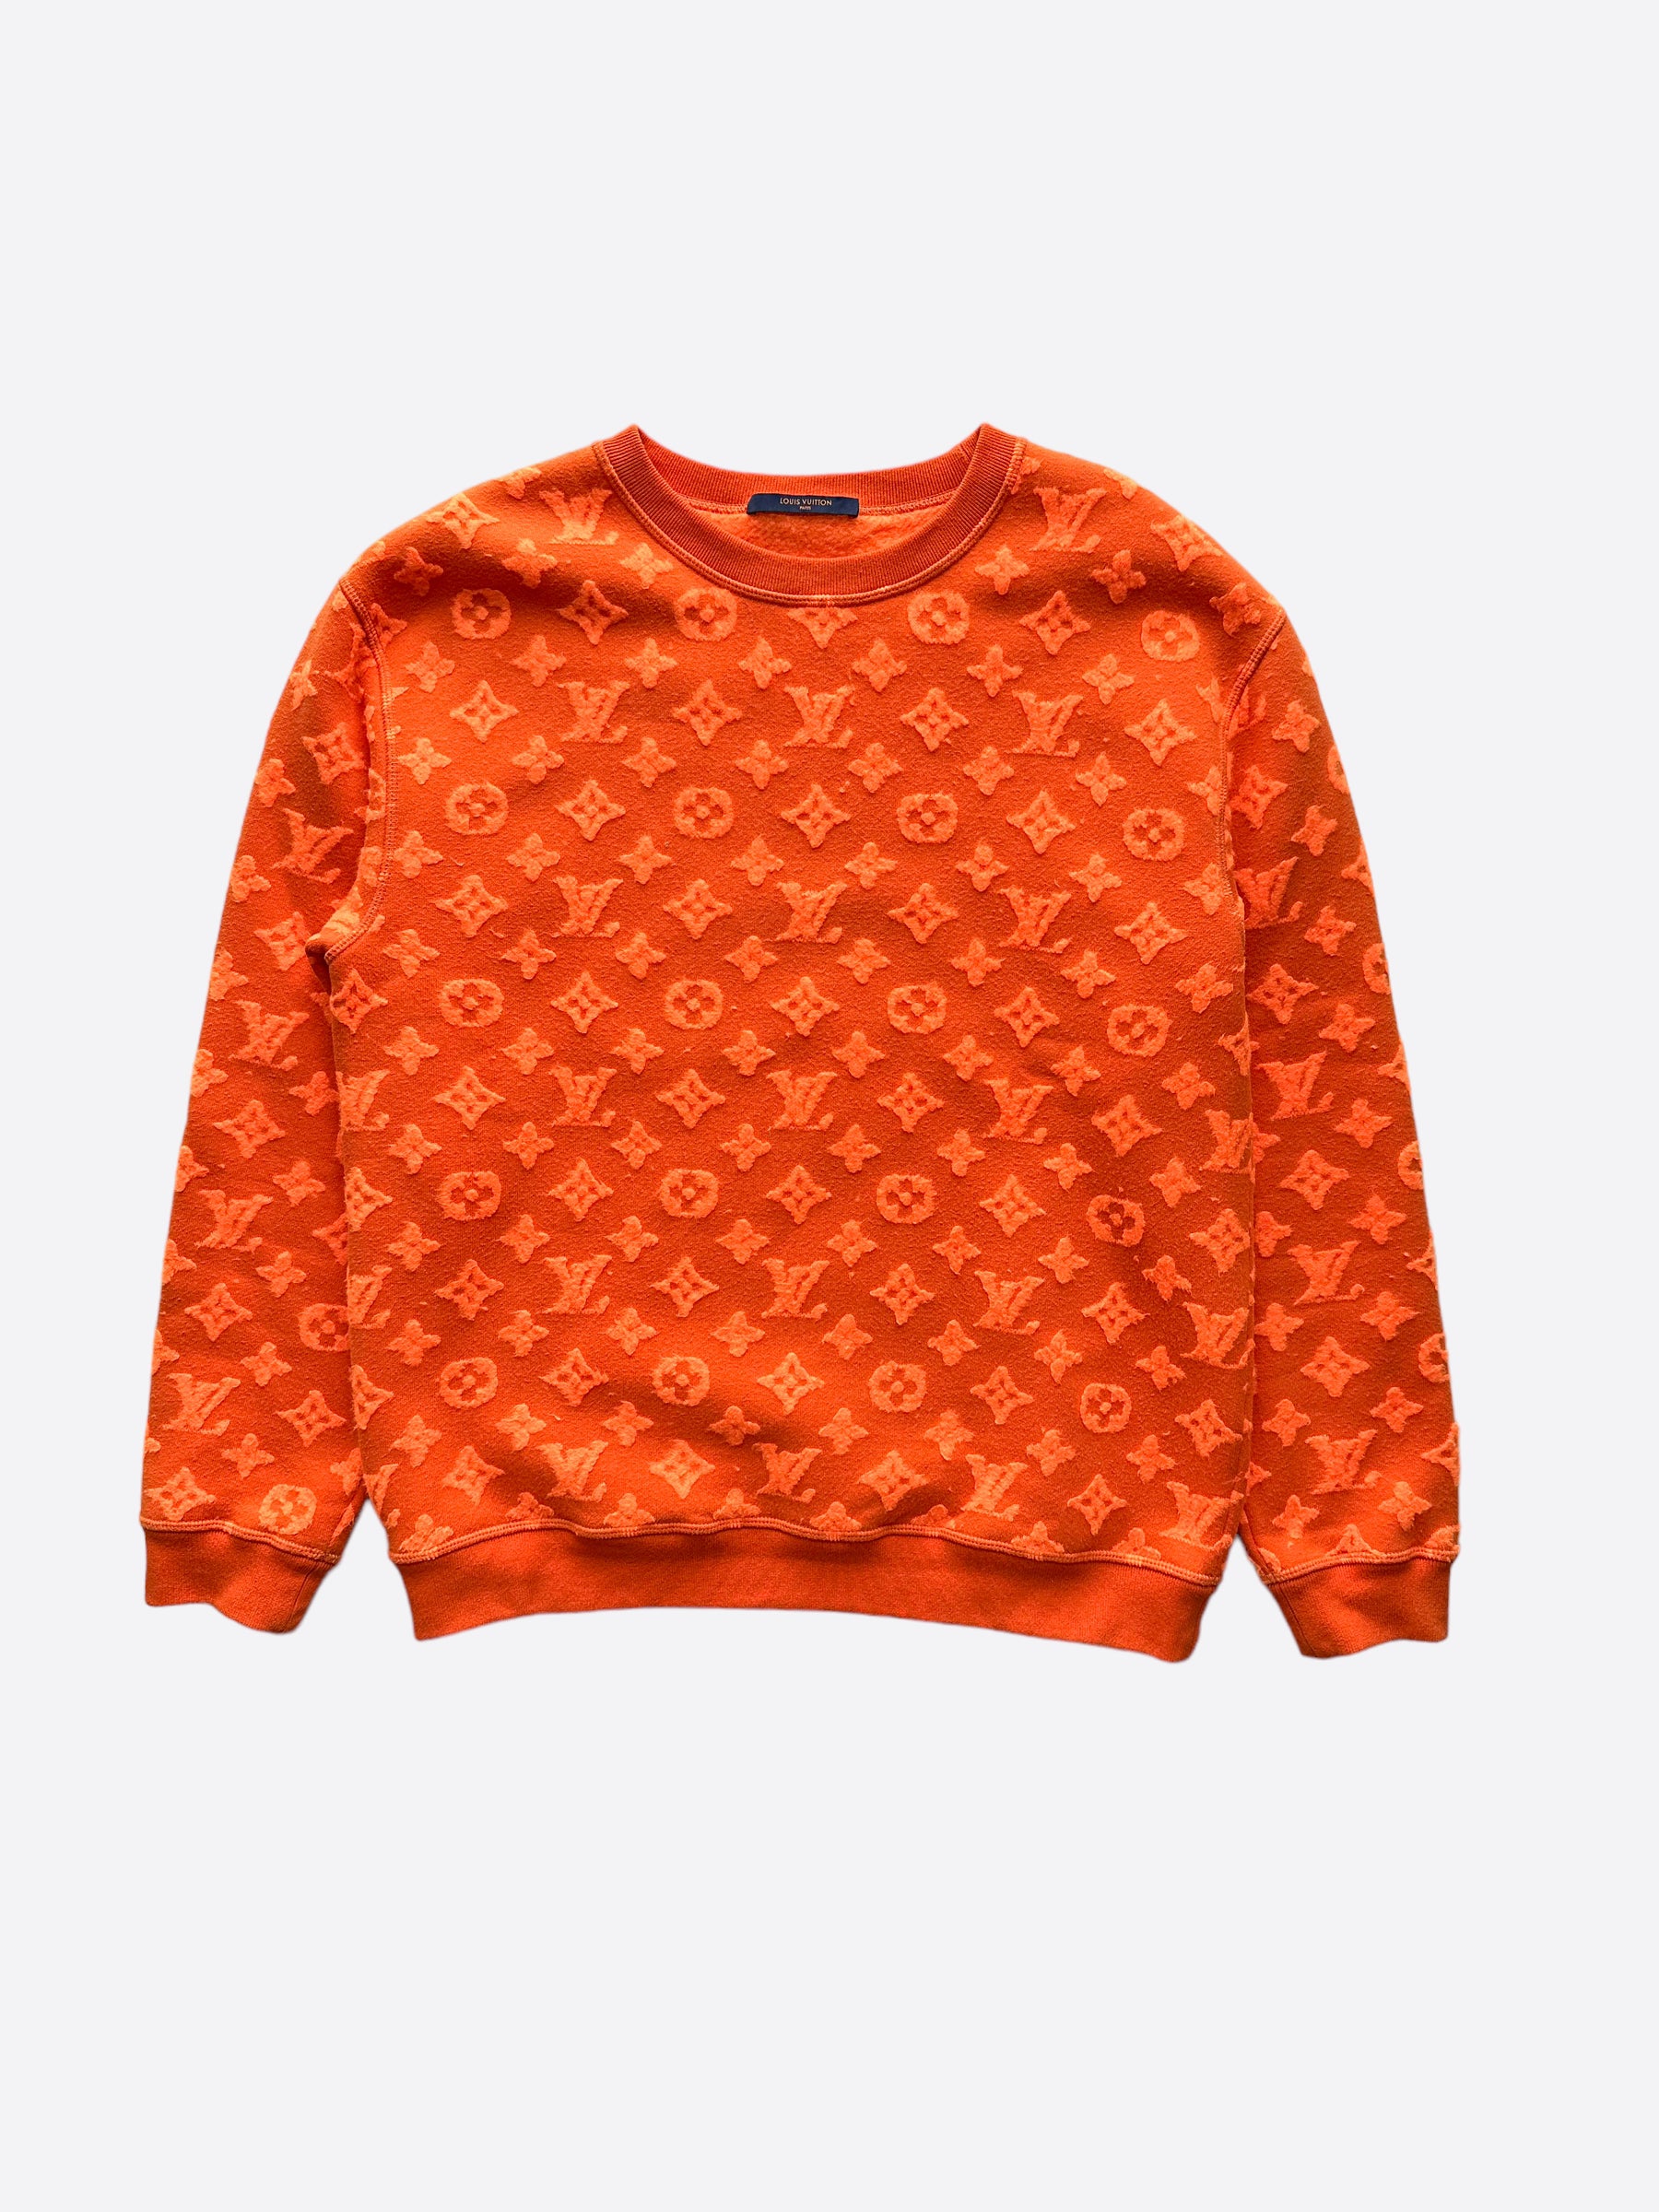 Sweatshirt Louis Vuitton Orange size L International in Polyester - 23864402